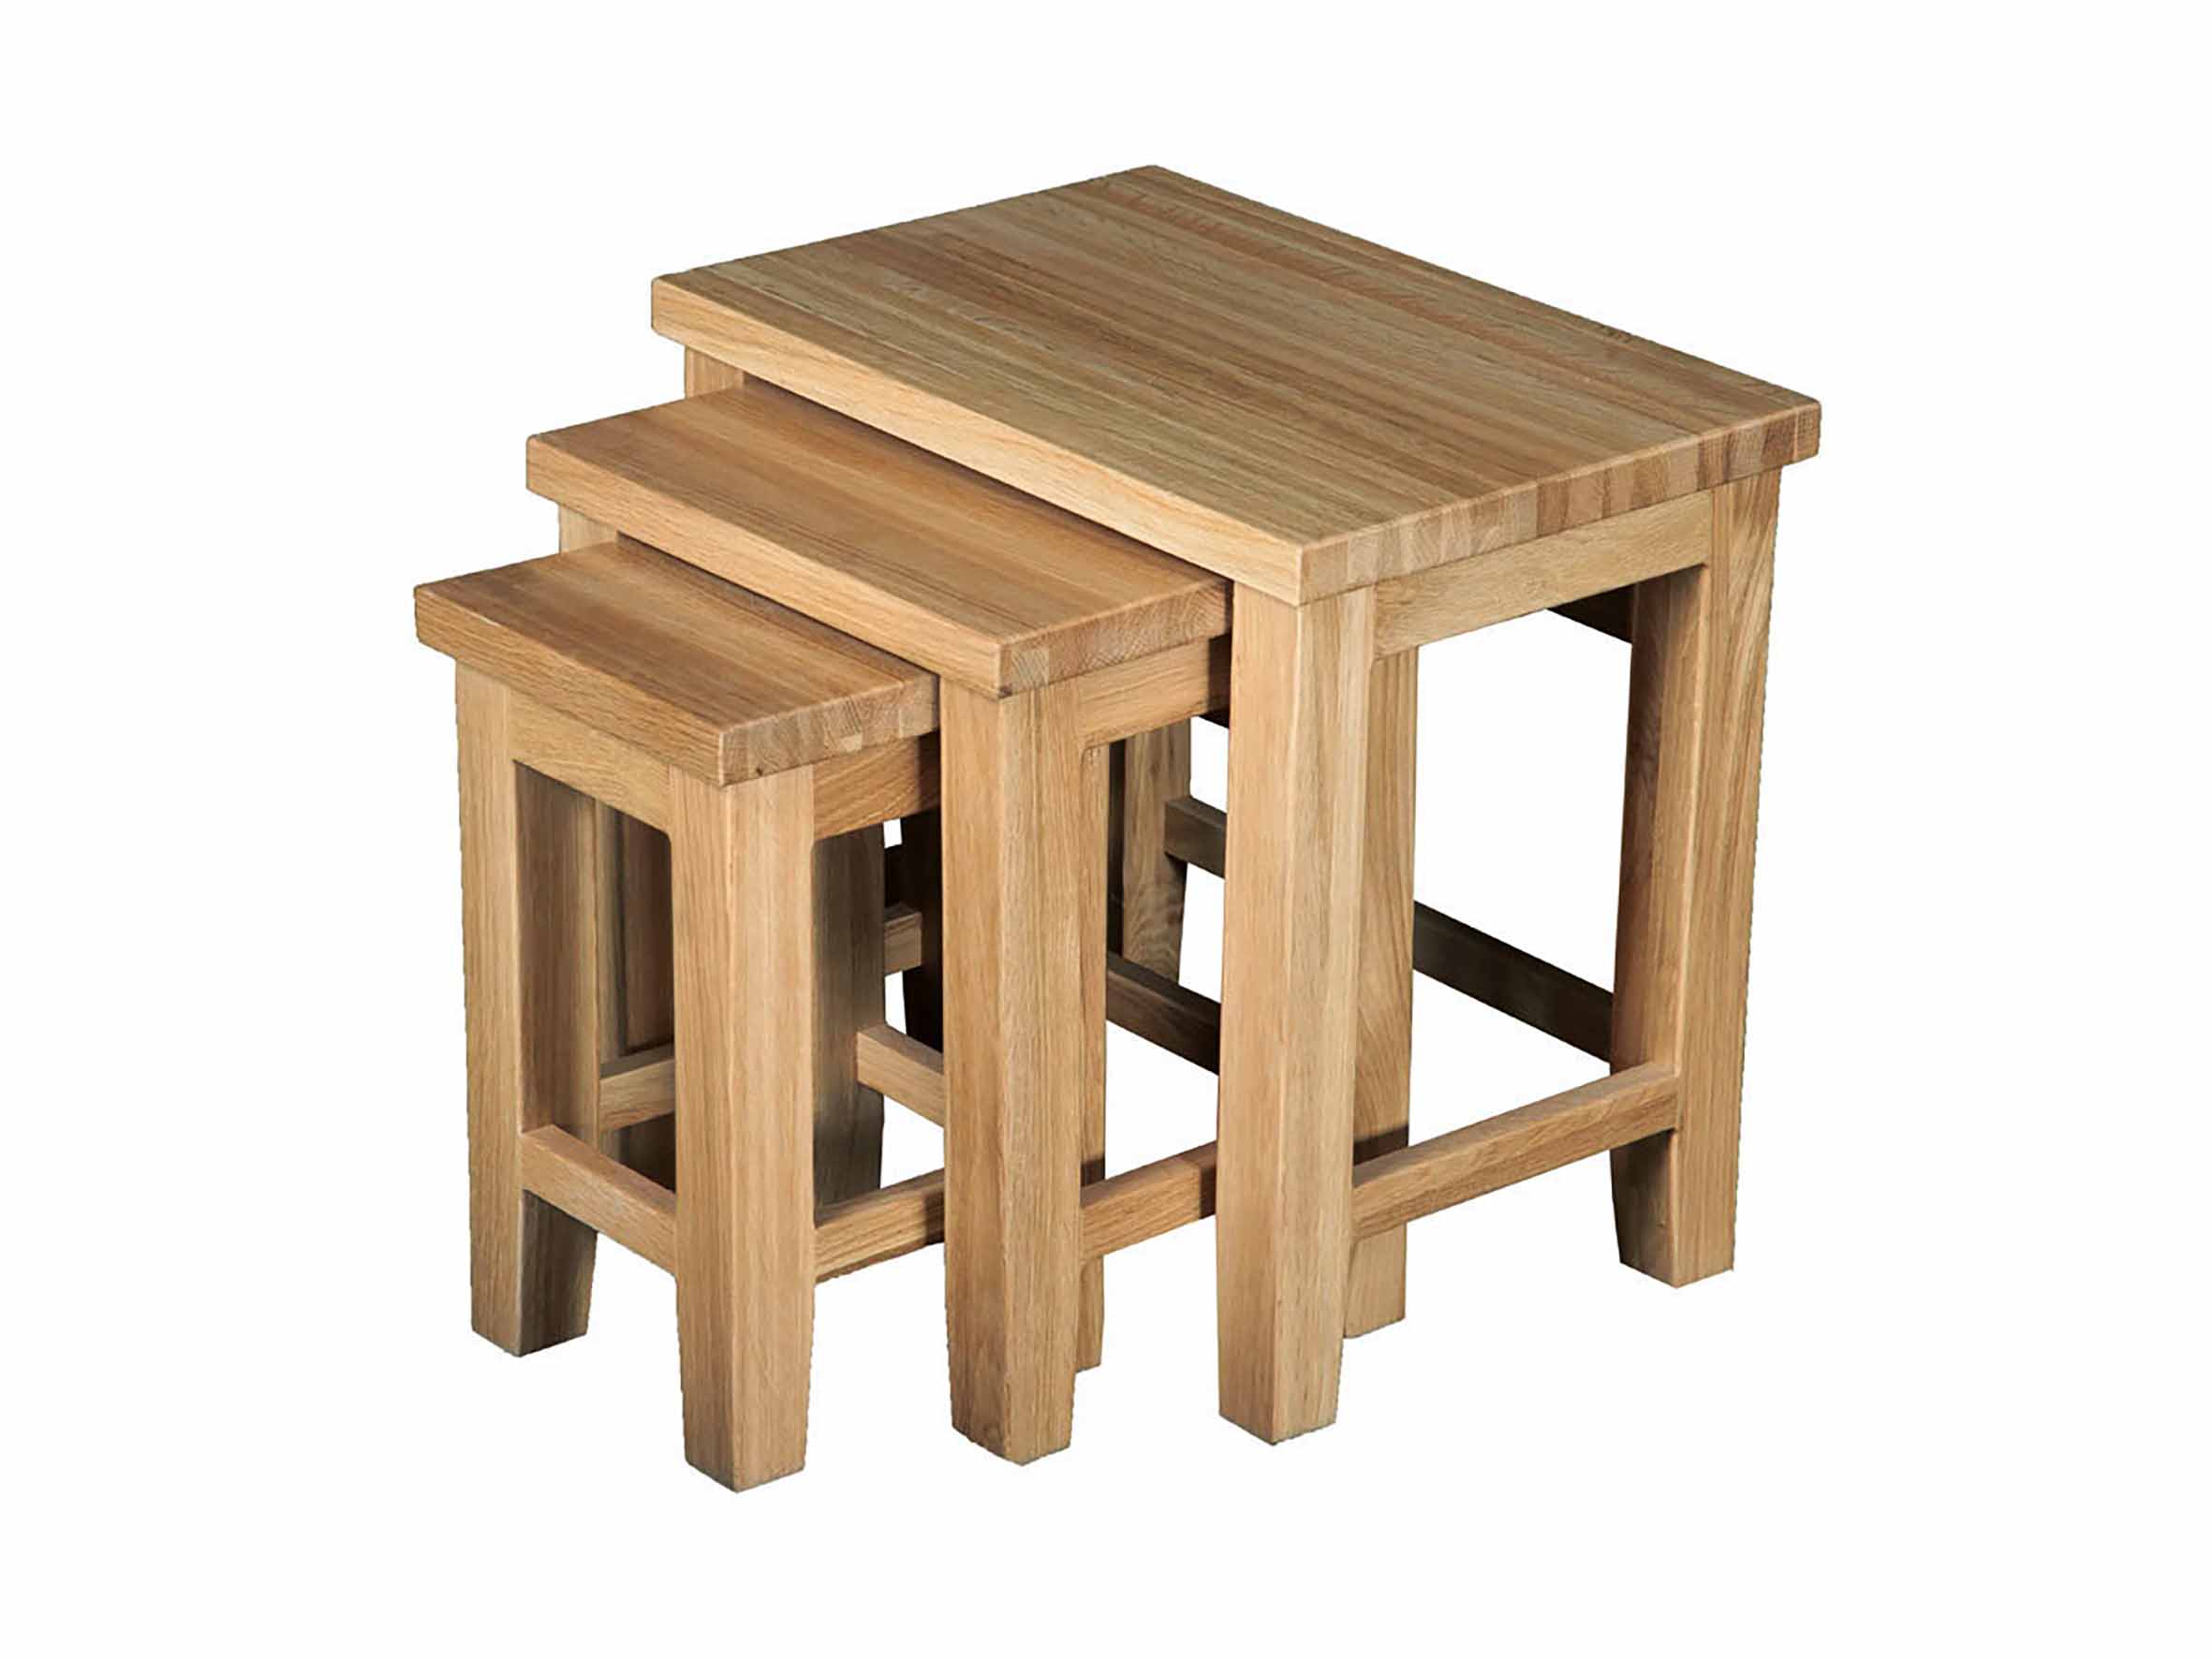 Eton Solid Oak Nest of Tables from Top Secret Furniture